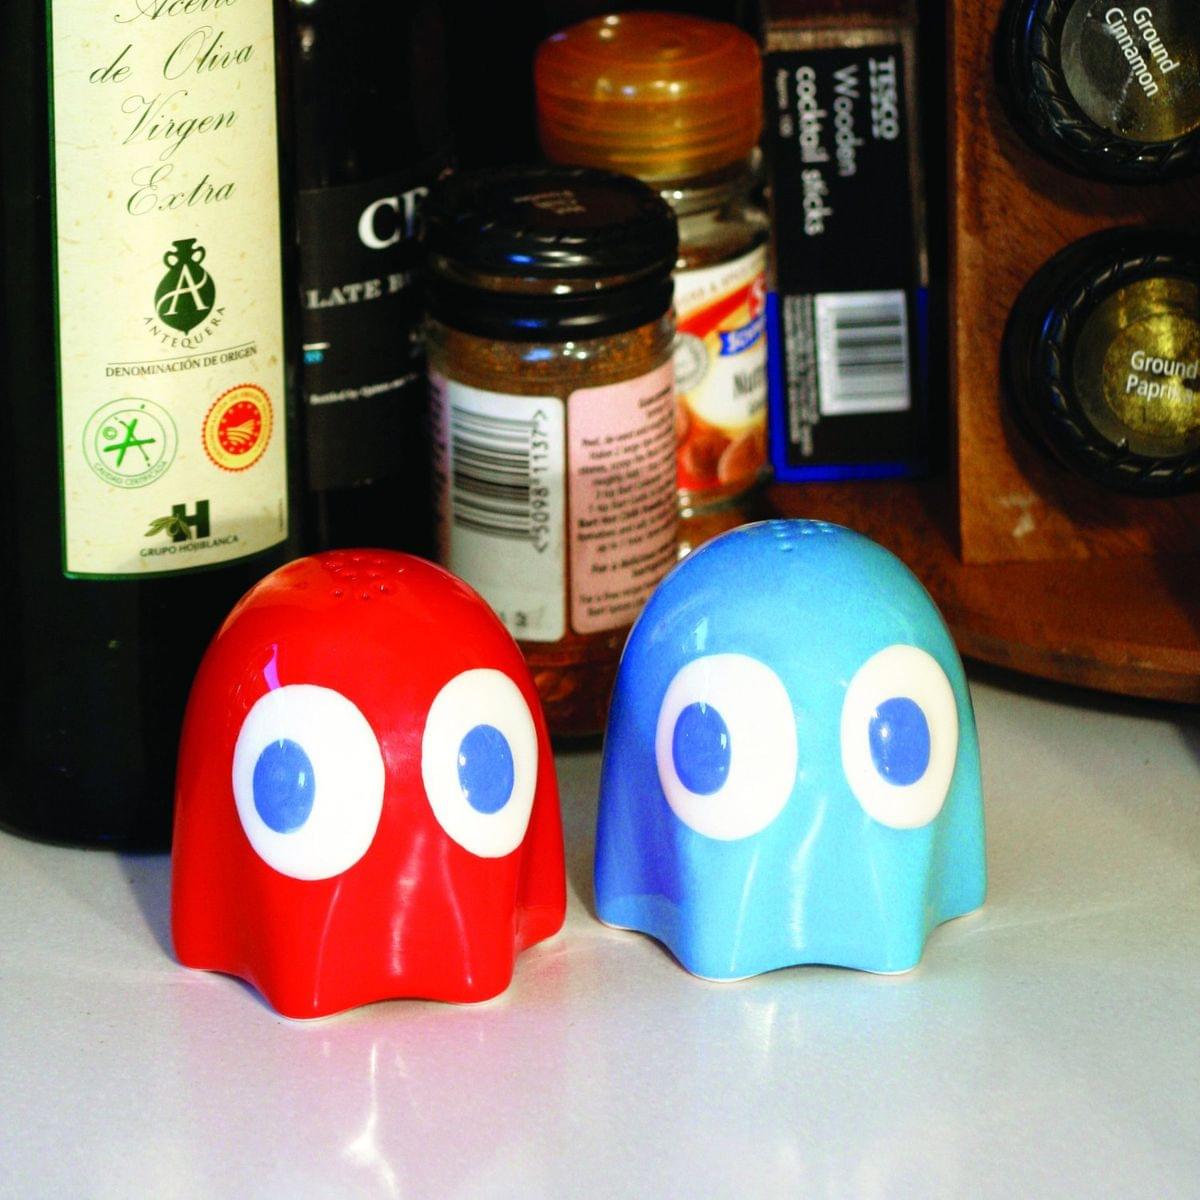 Pac-Man Ghost Salt & Pepper Shakers